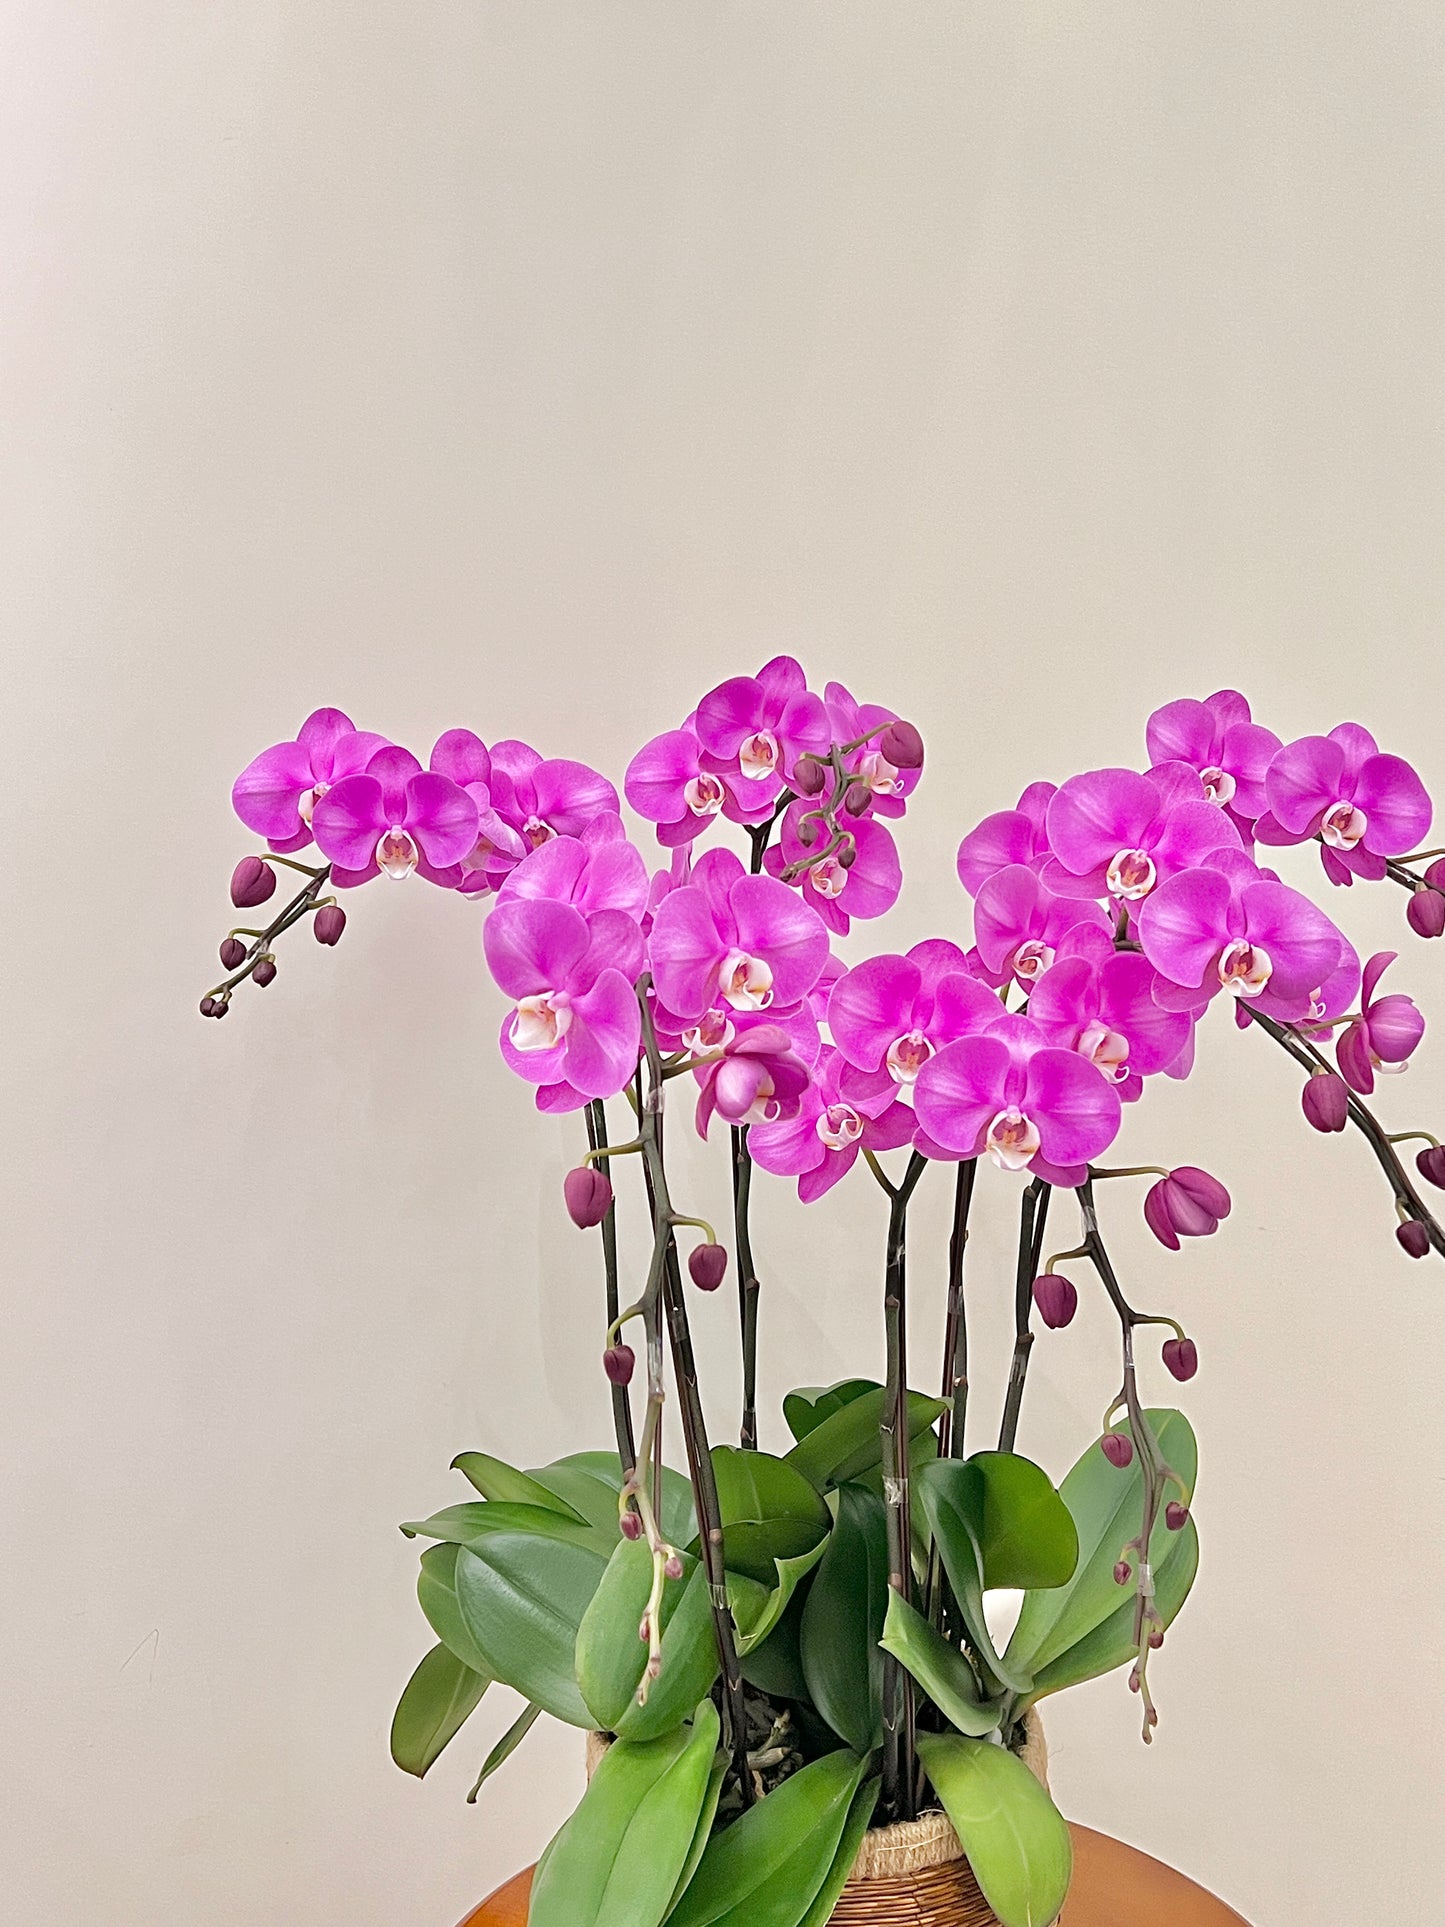 賀年蘭花盆栽擺設 Orchid #1